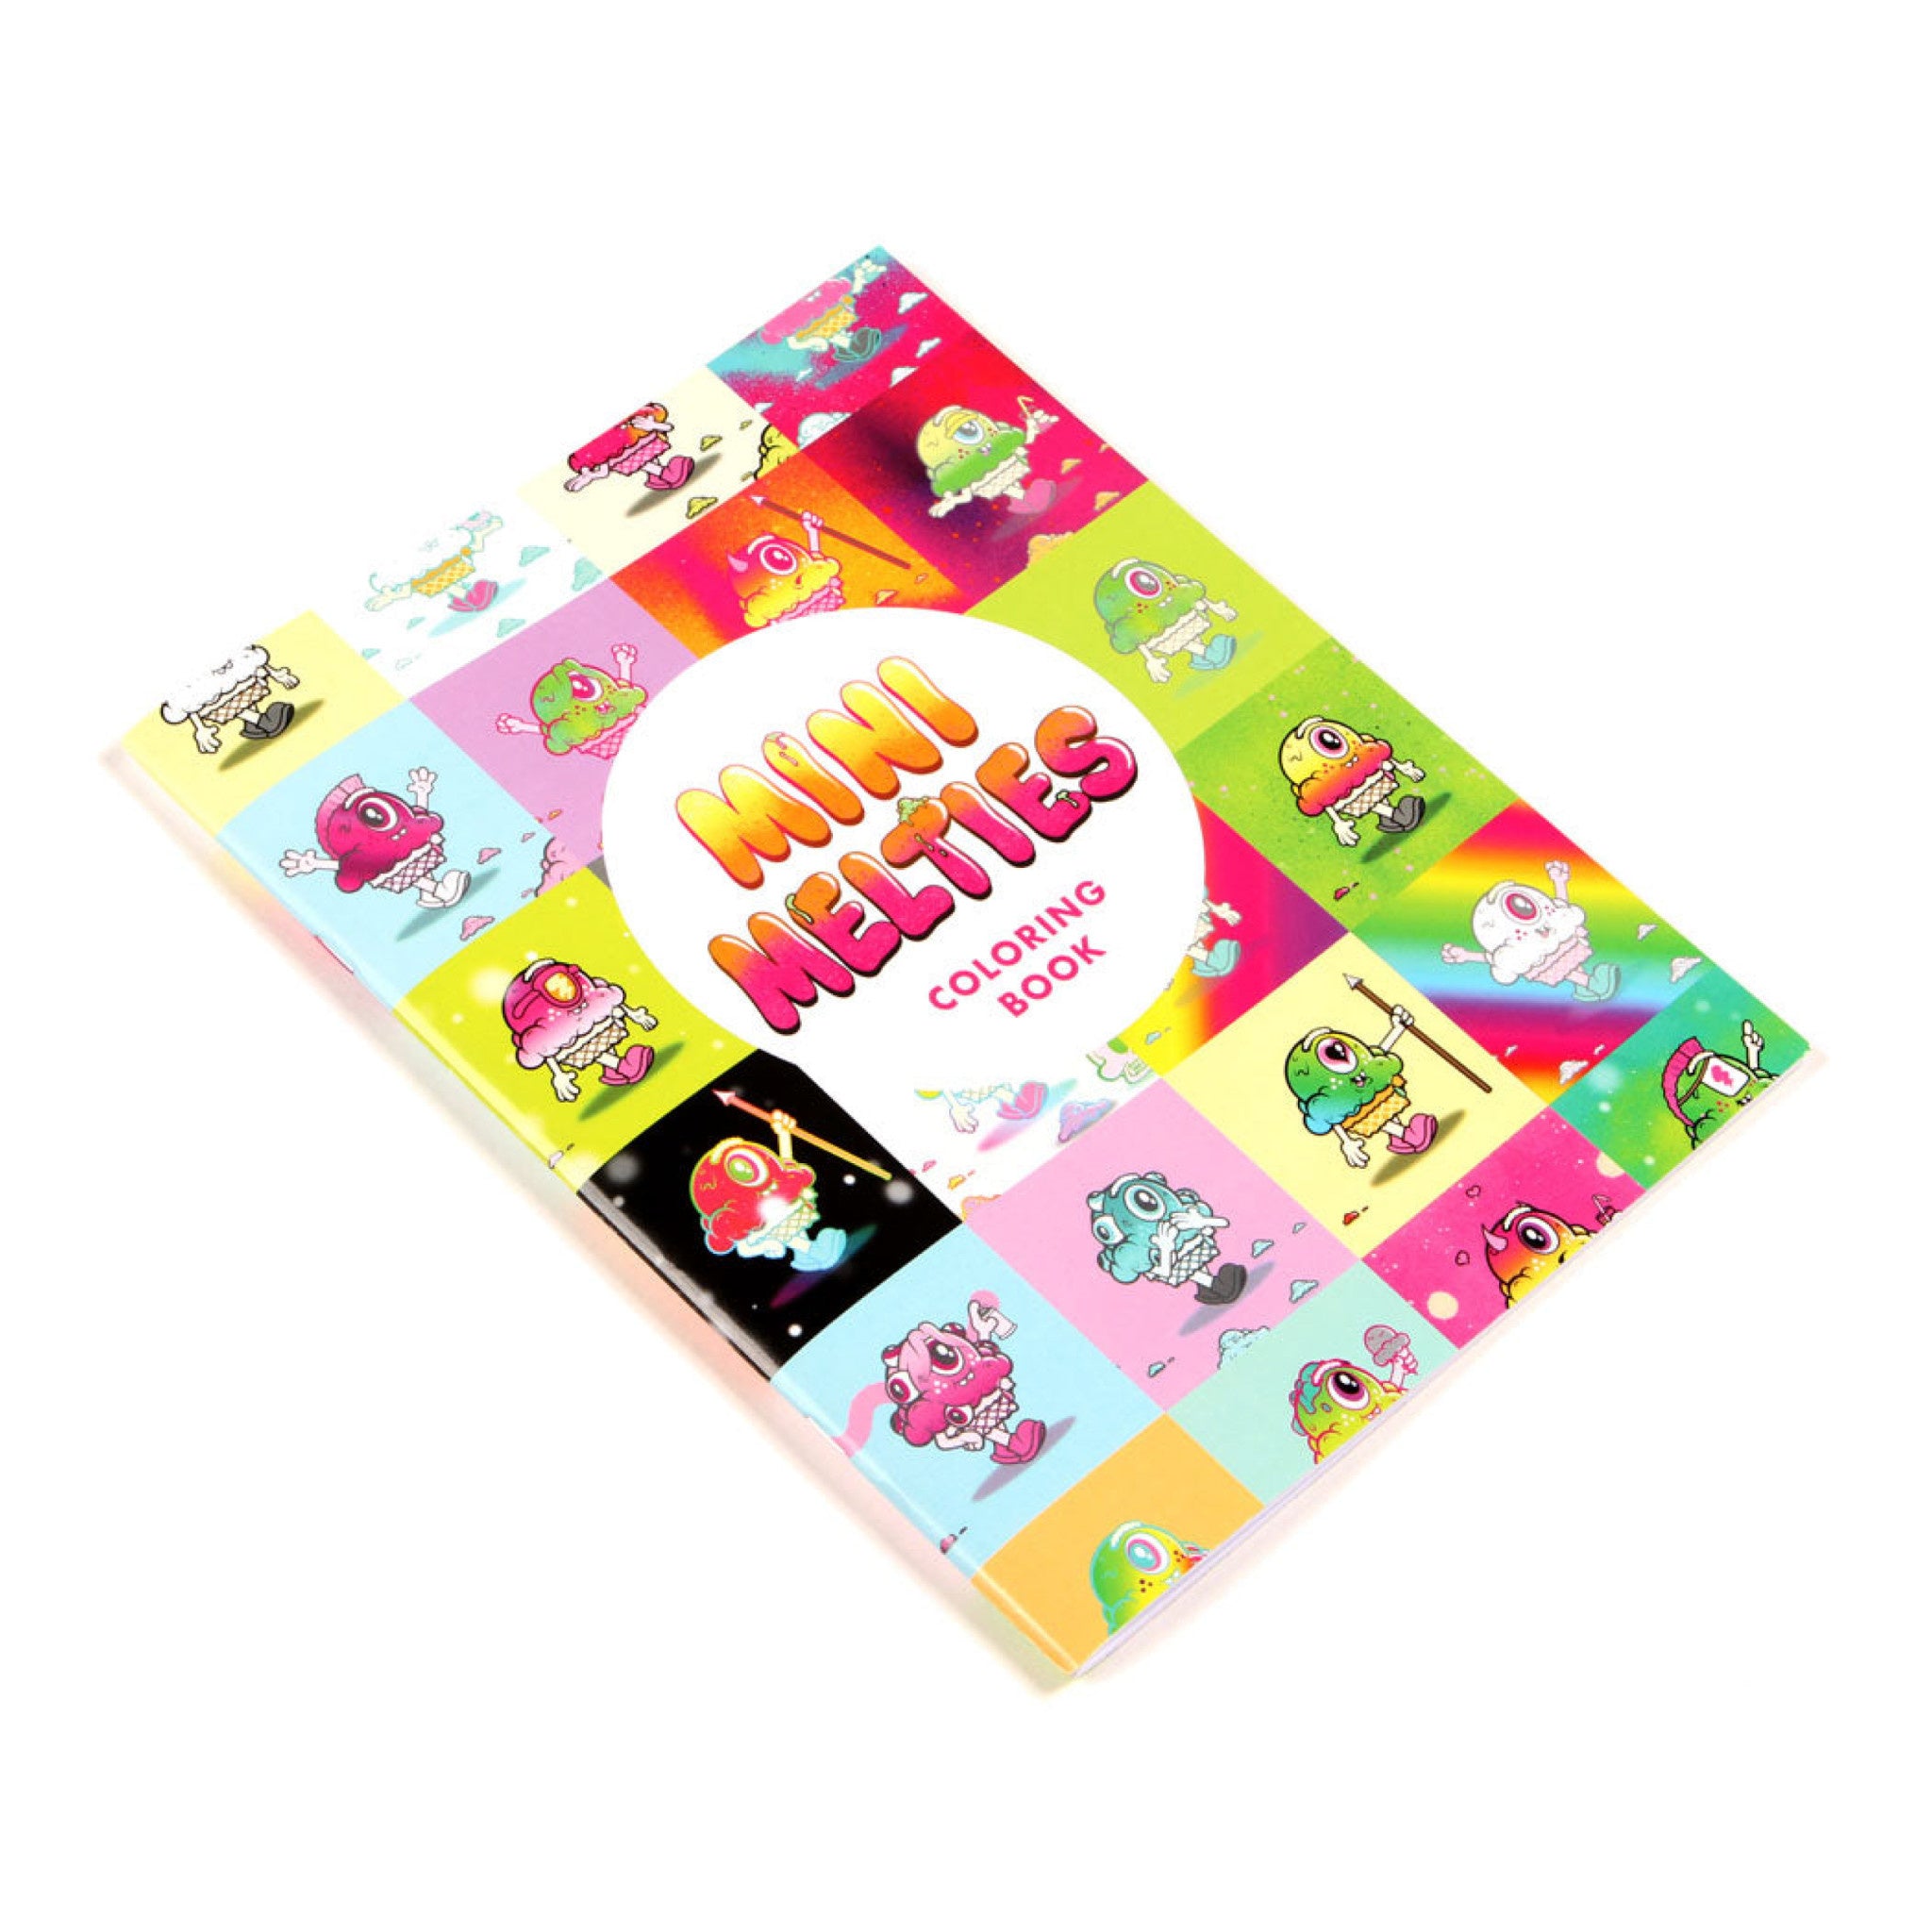 Mini Coloring Books – Mini Muse Coloring